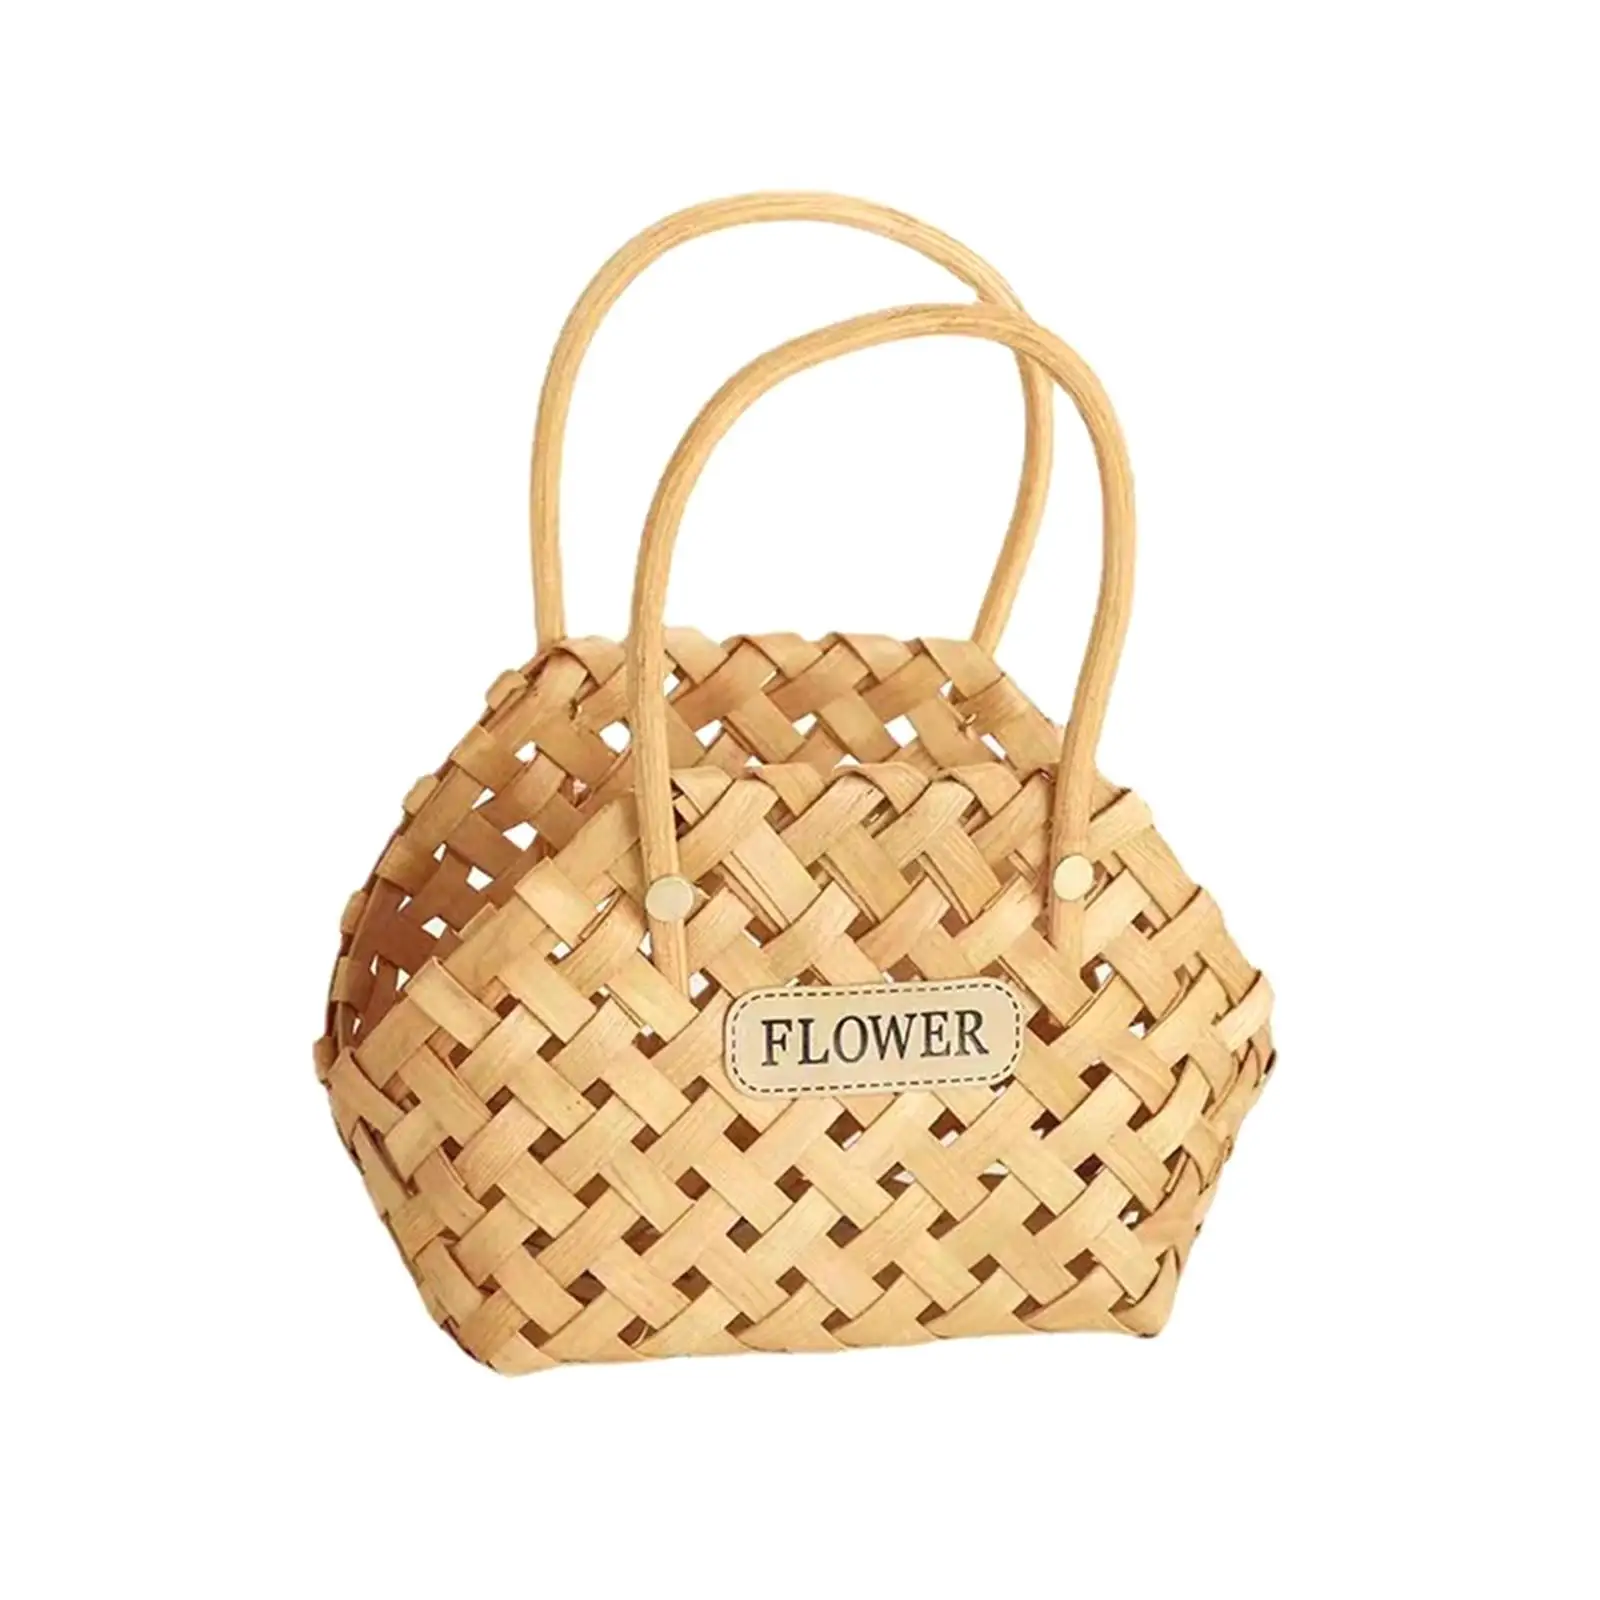 Picking Basket Organizer Reusable Storage Basket with Handle Flower Girl Basket for Flower Wedding Camping Outdoor